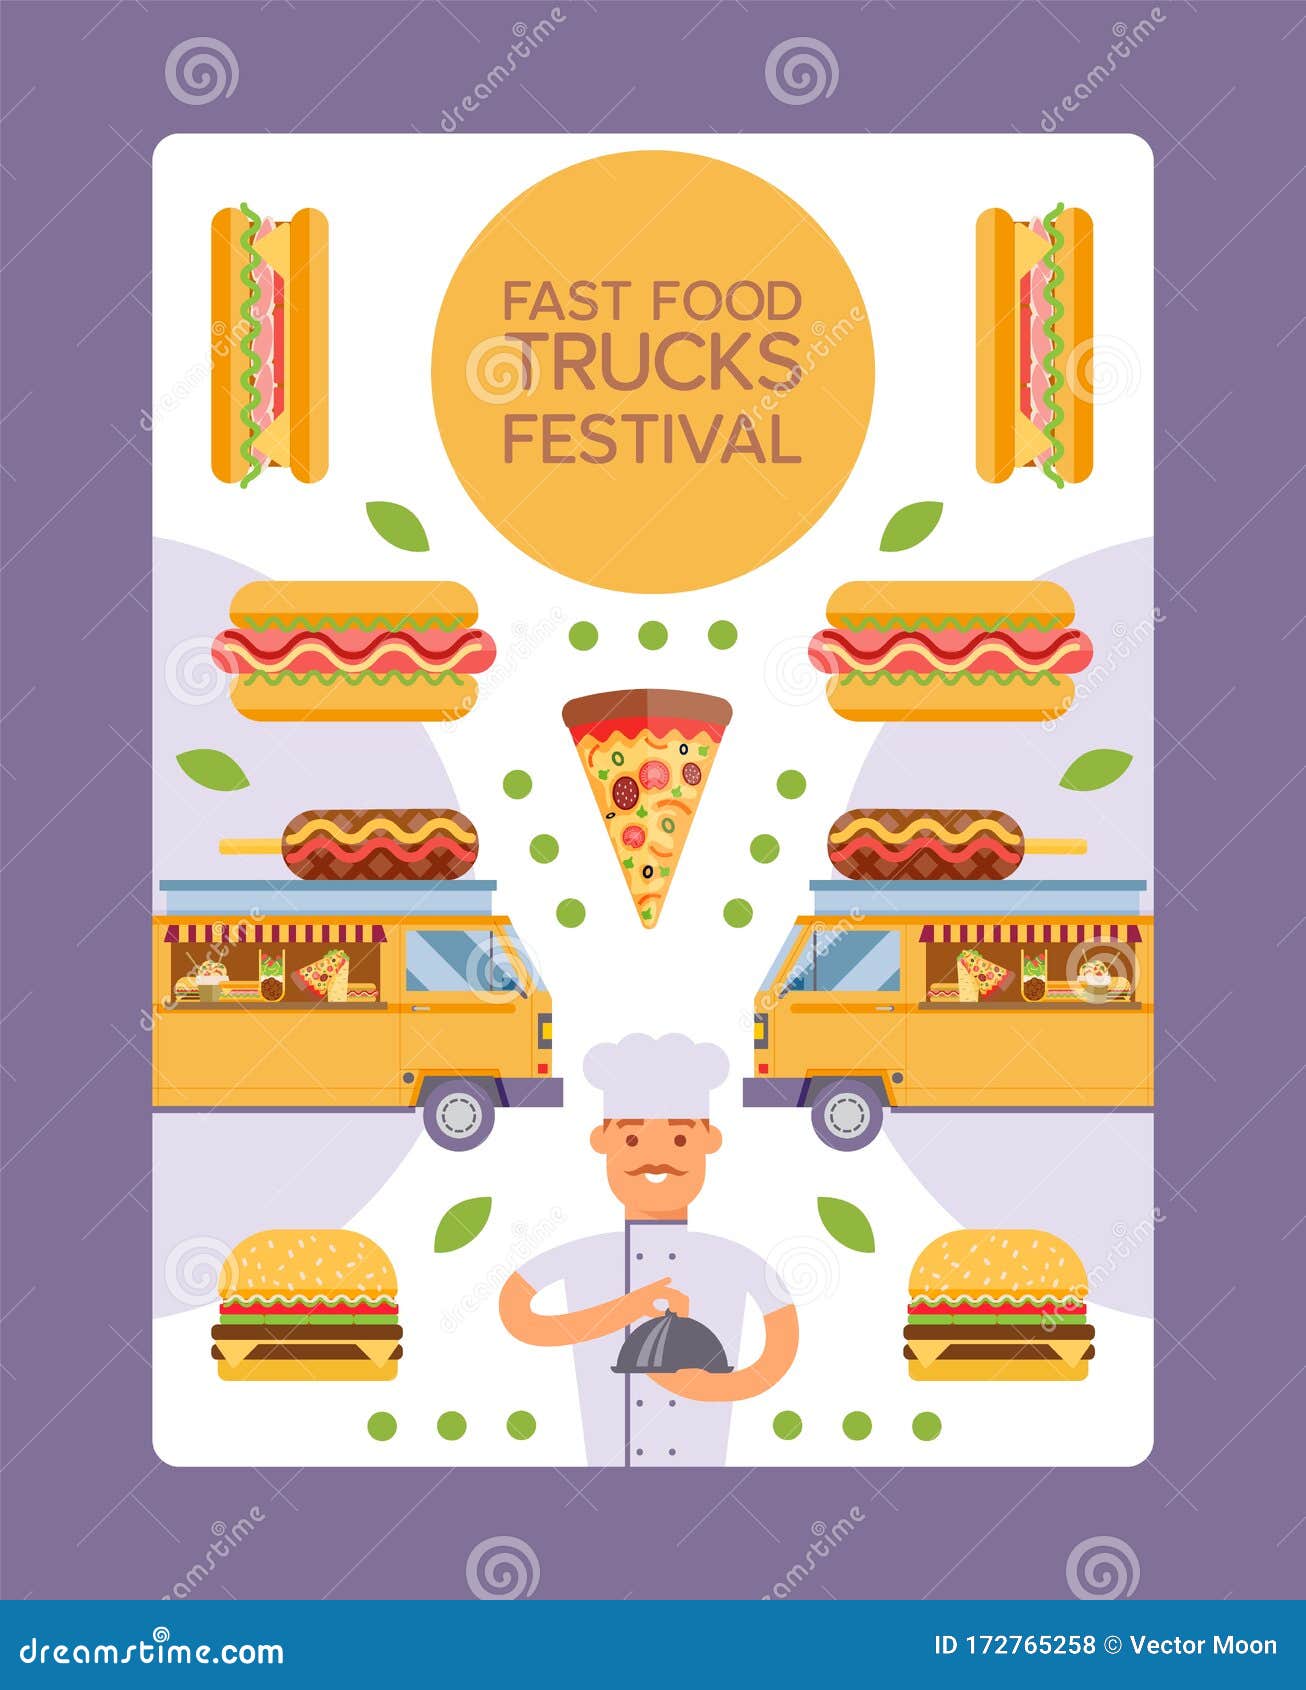 Fast Food Truck Festival Vector Illustration For Banner Design With ...